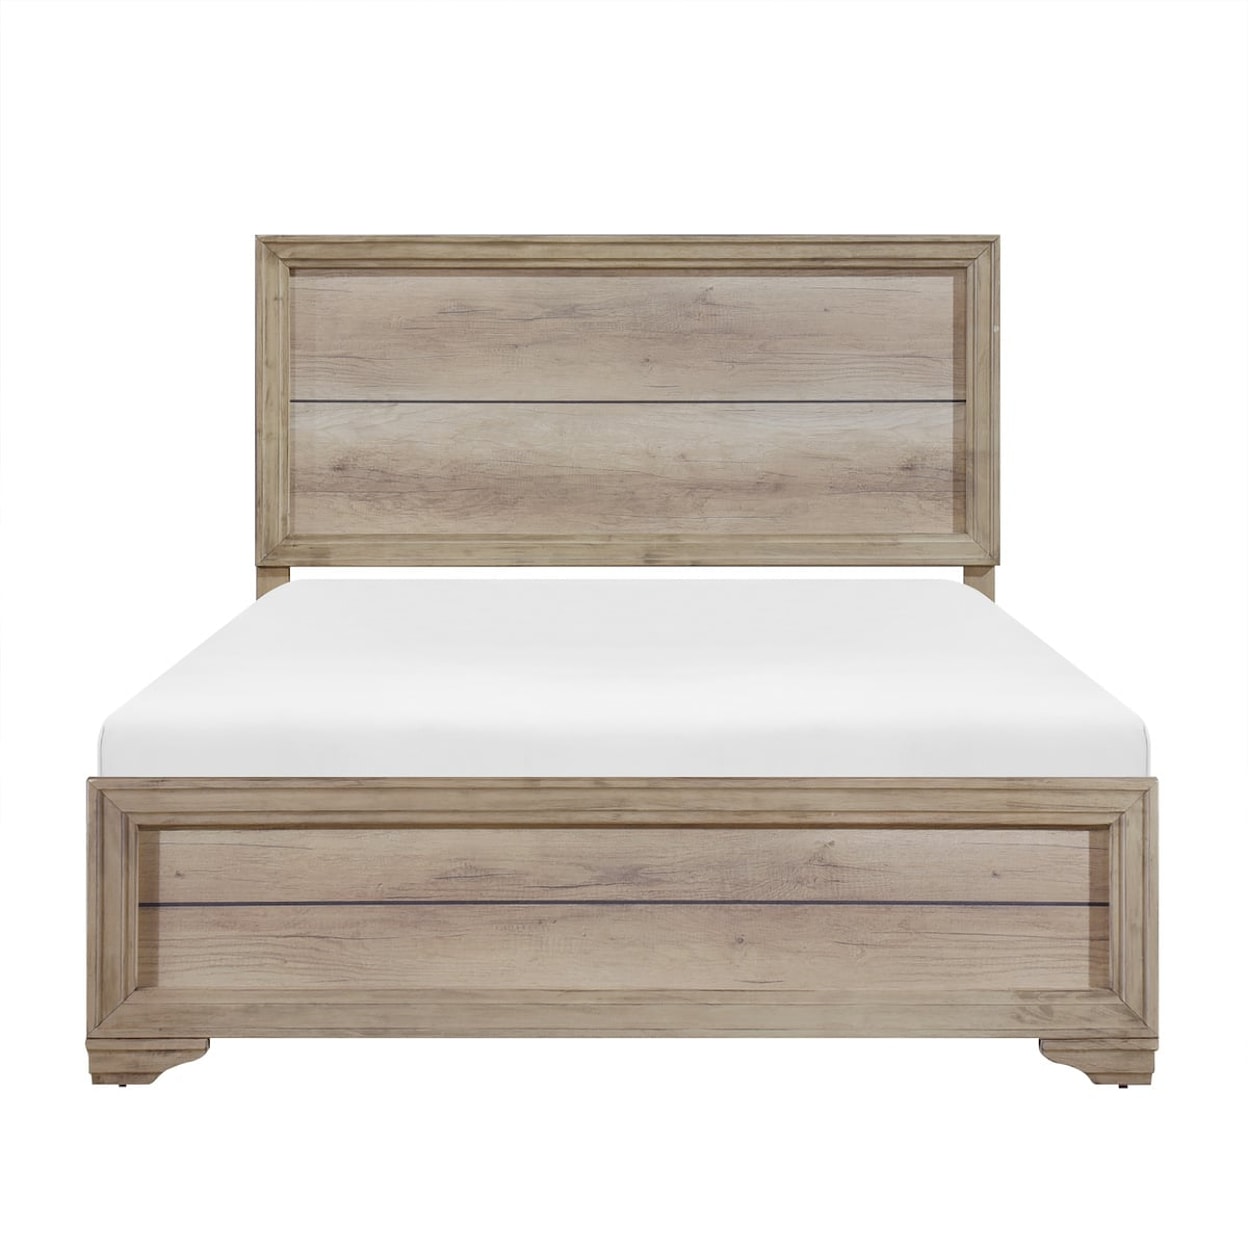 Homelegance Furniture Lonan King Bed